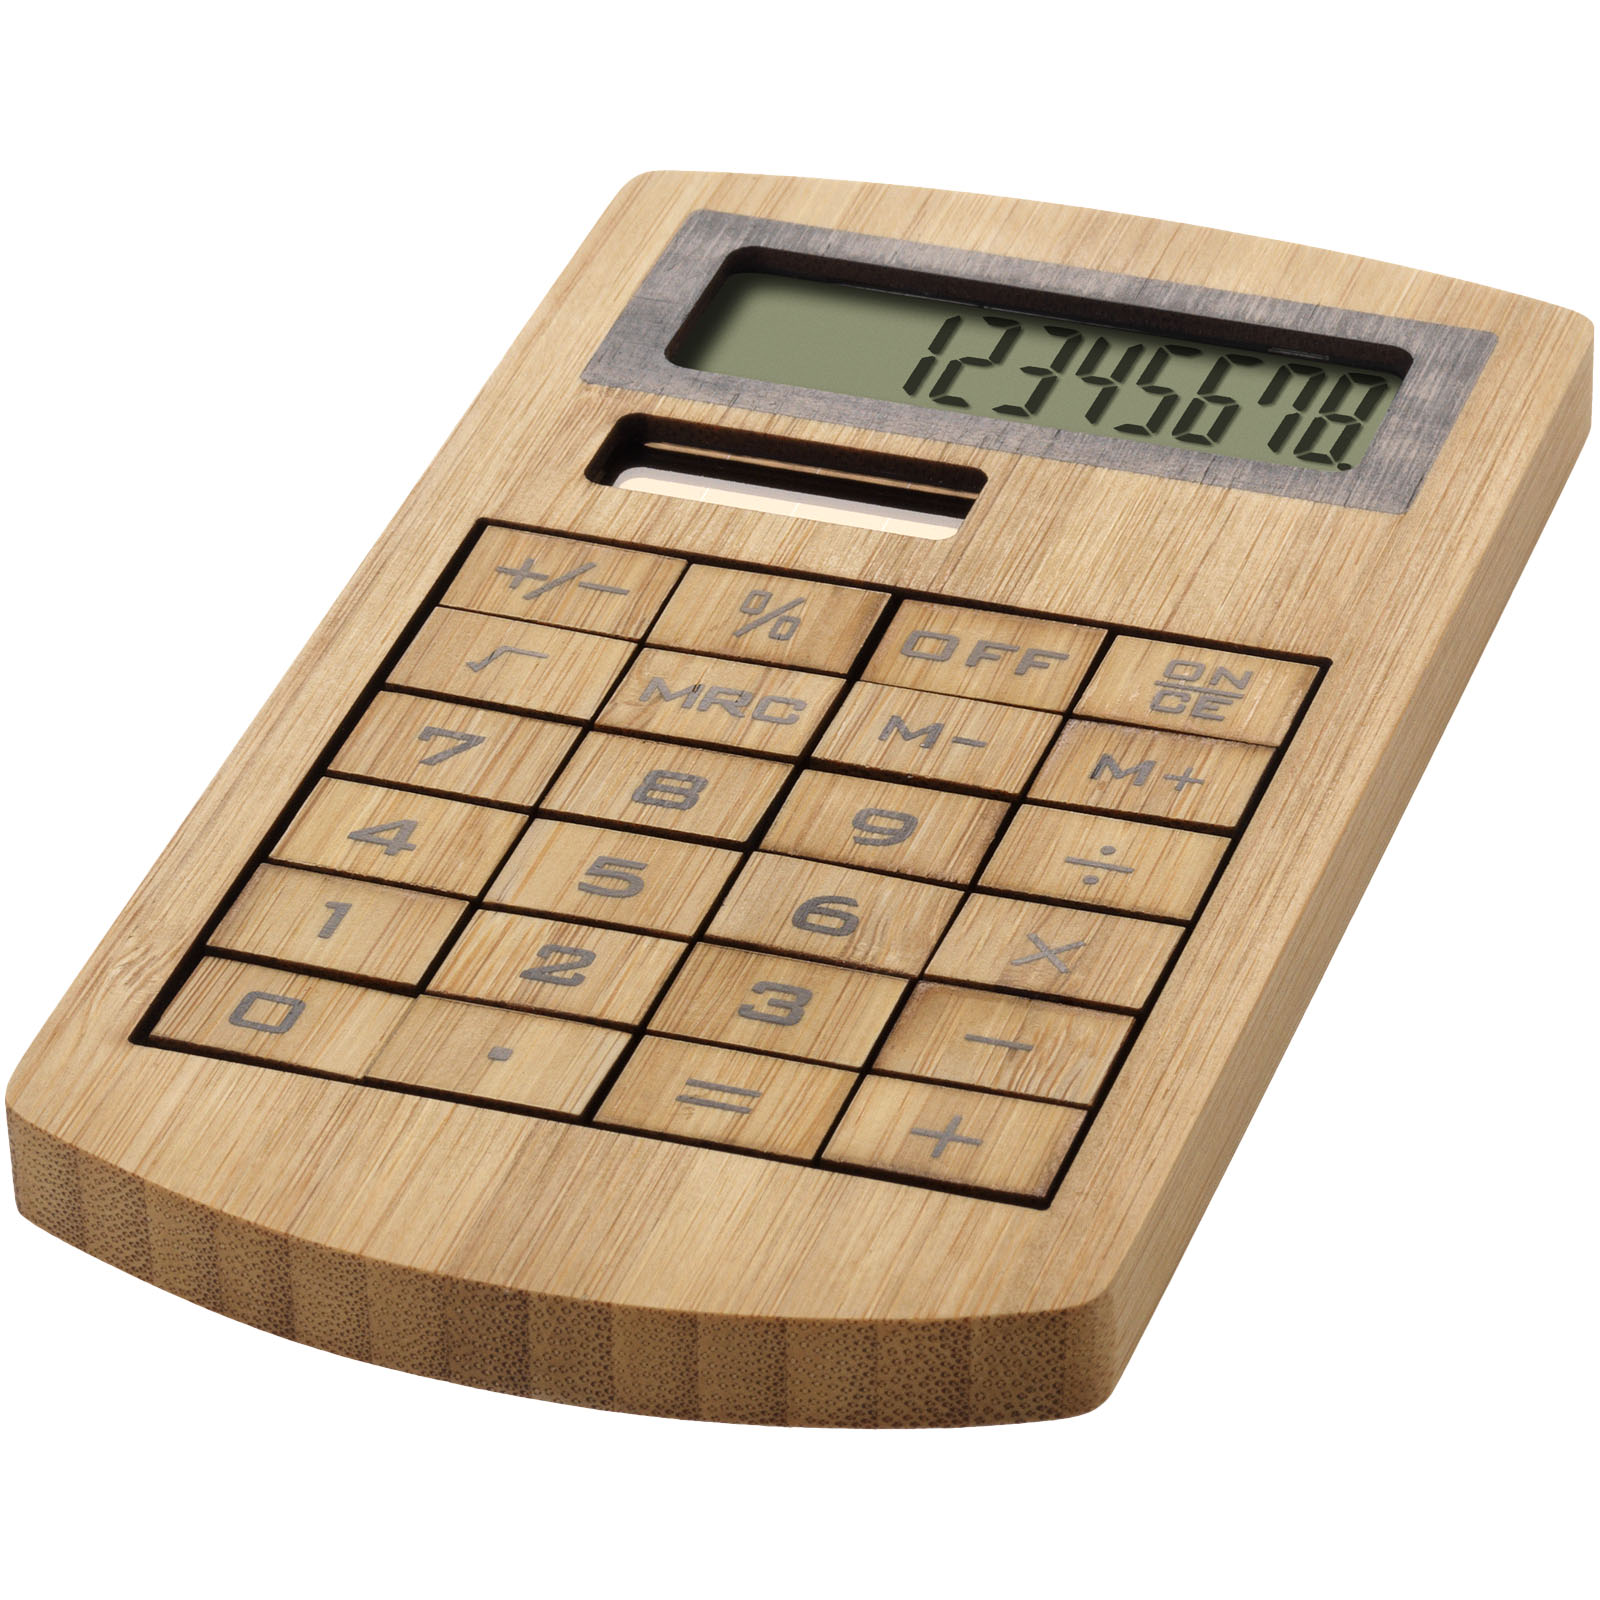 Desk Accessories - Eugene calculator made of bamboo